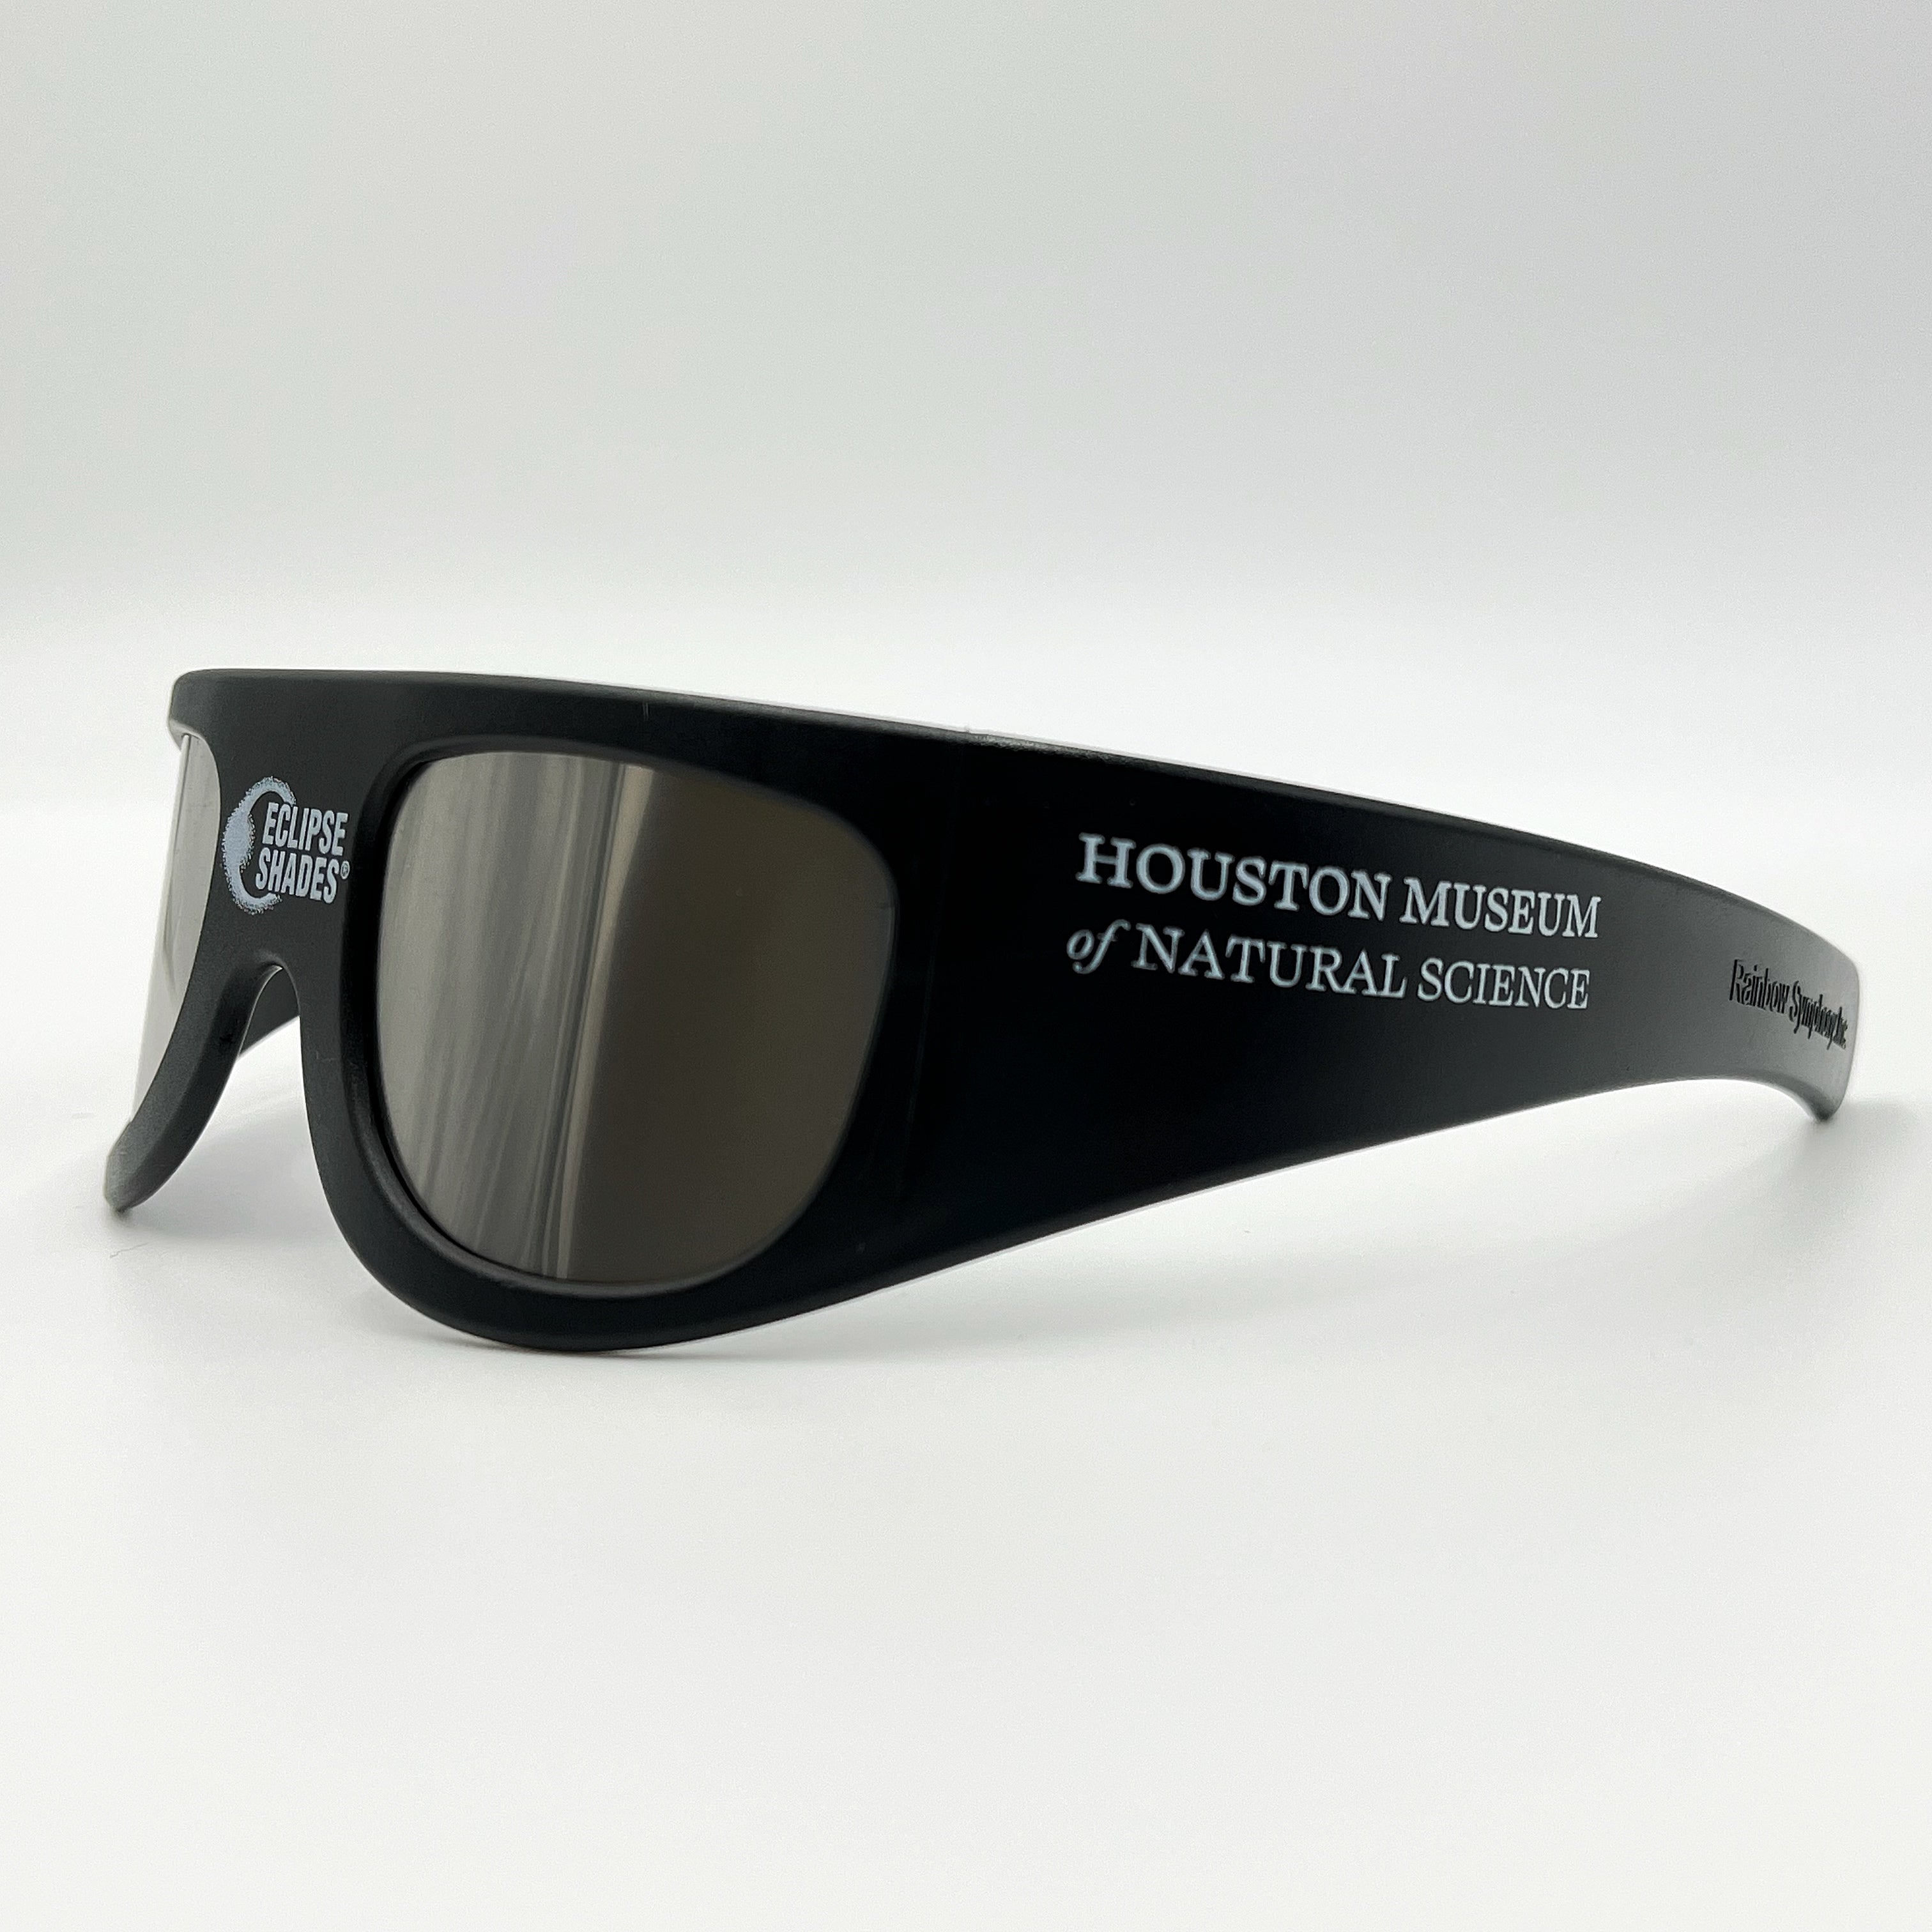 HMNS Plastic Solar Eclipse Glasses- All Sales Final